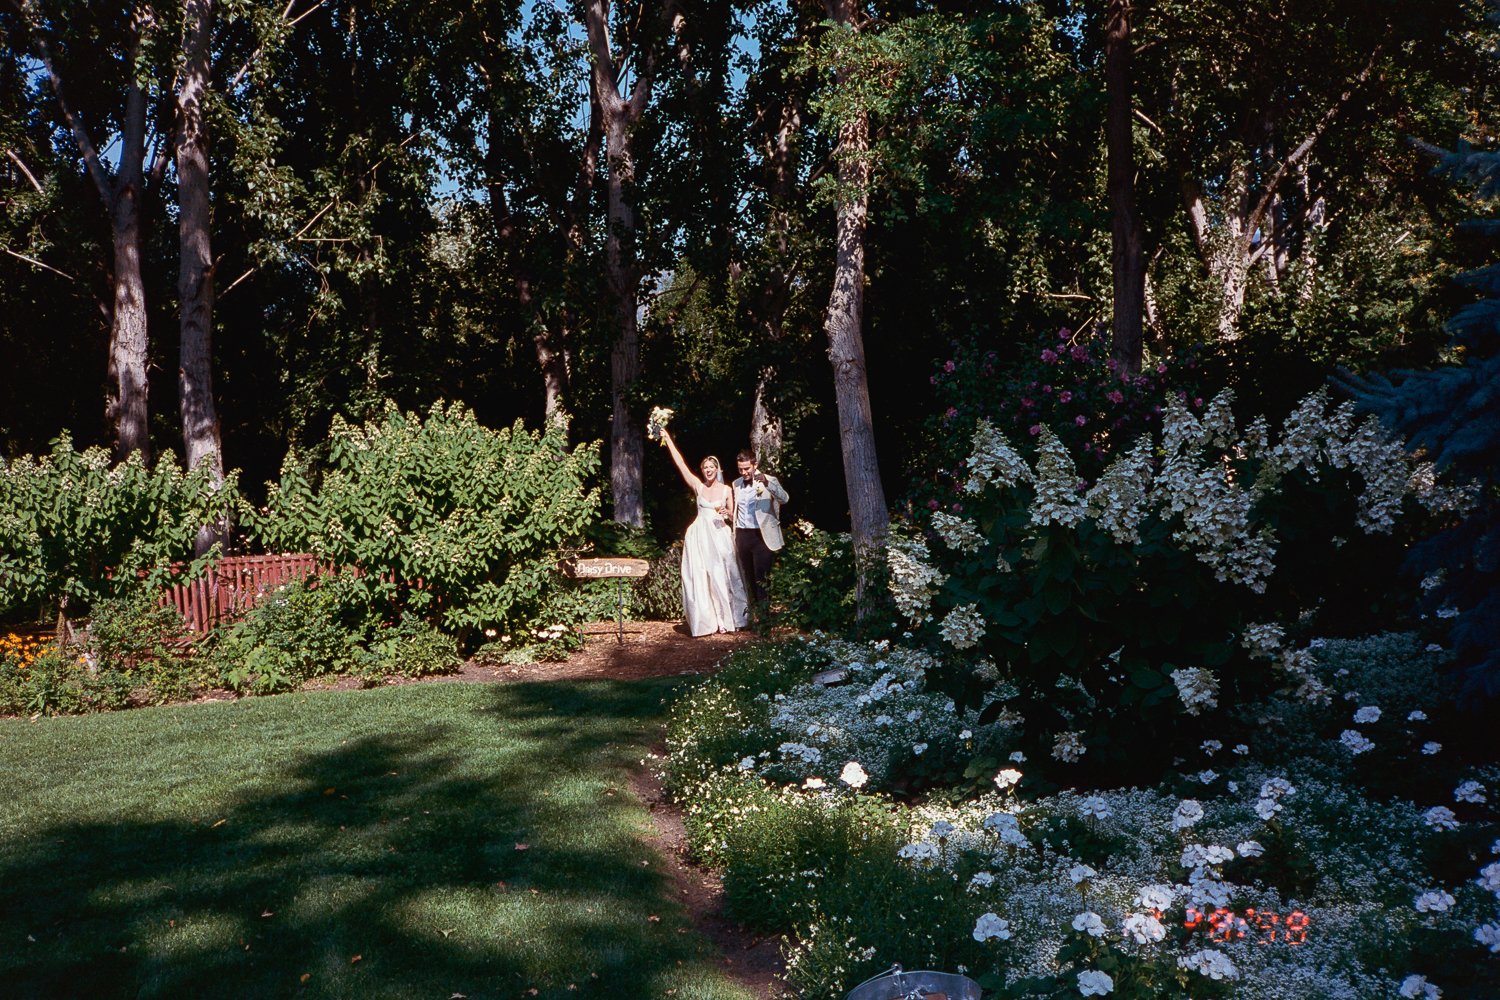 Linden-Gardens-Wedding-Venue-Okanagan-Penticton-Photography-Film-Analog-30.JPG